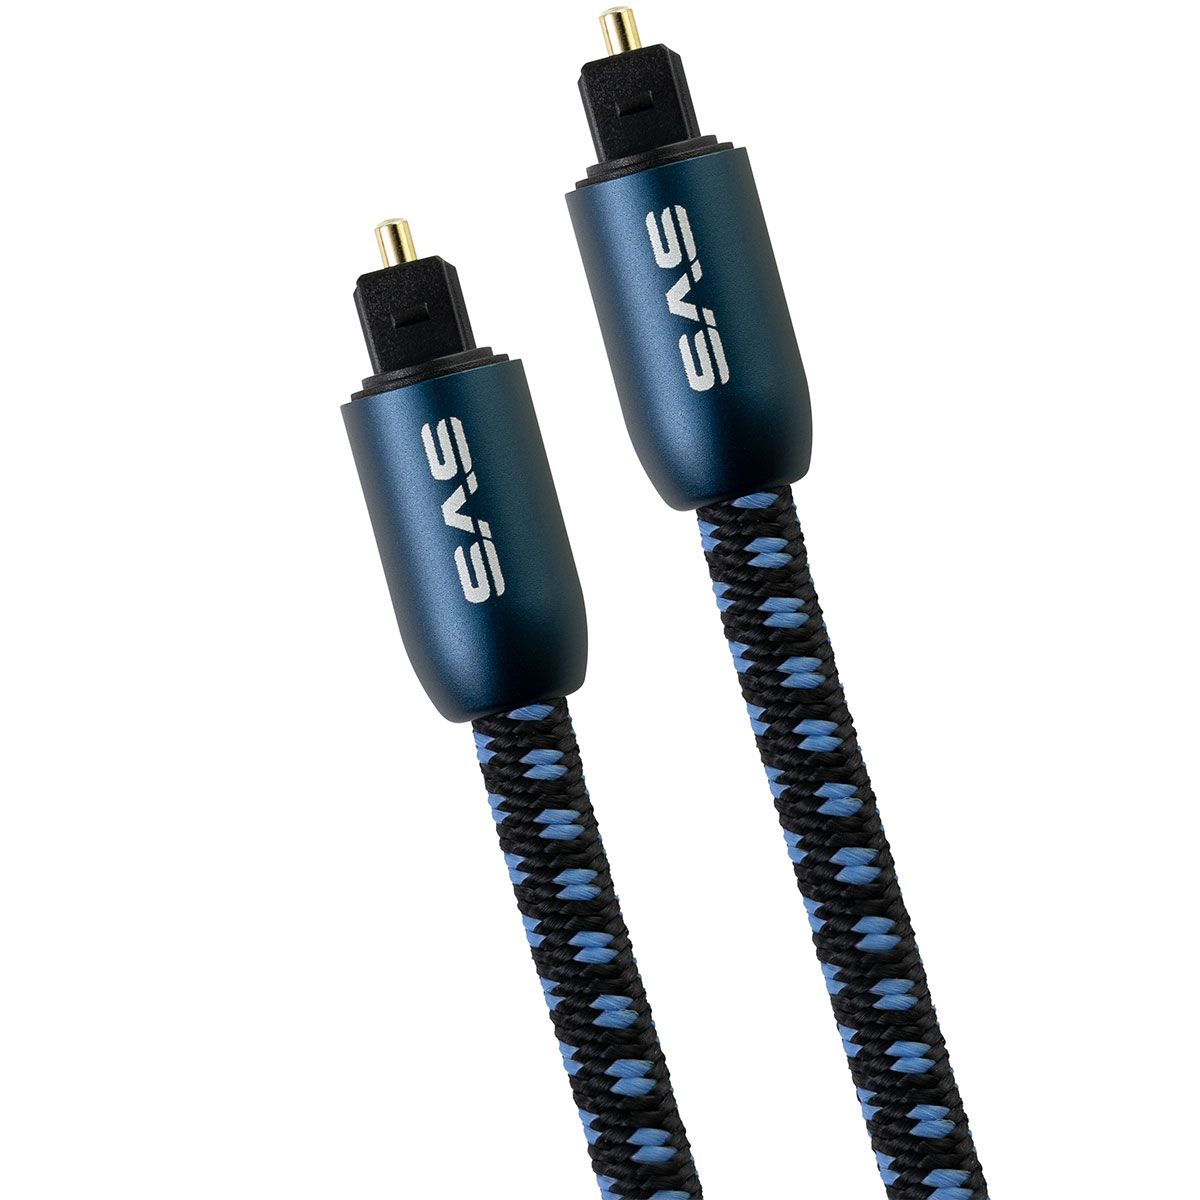 SVS SoundPath Digital Optical Cable - hero shot